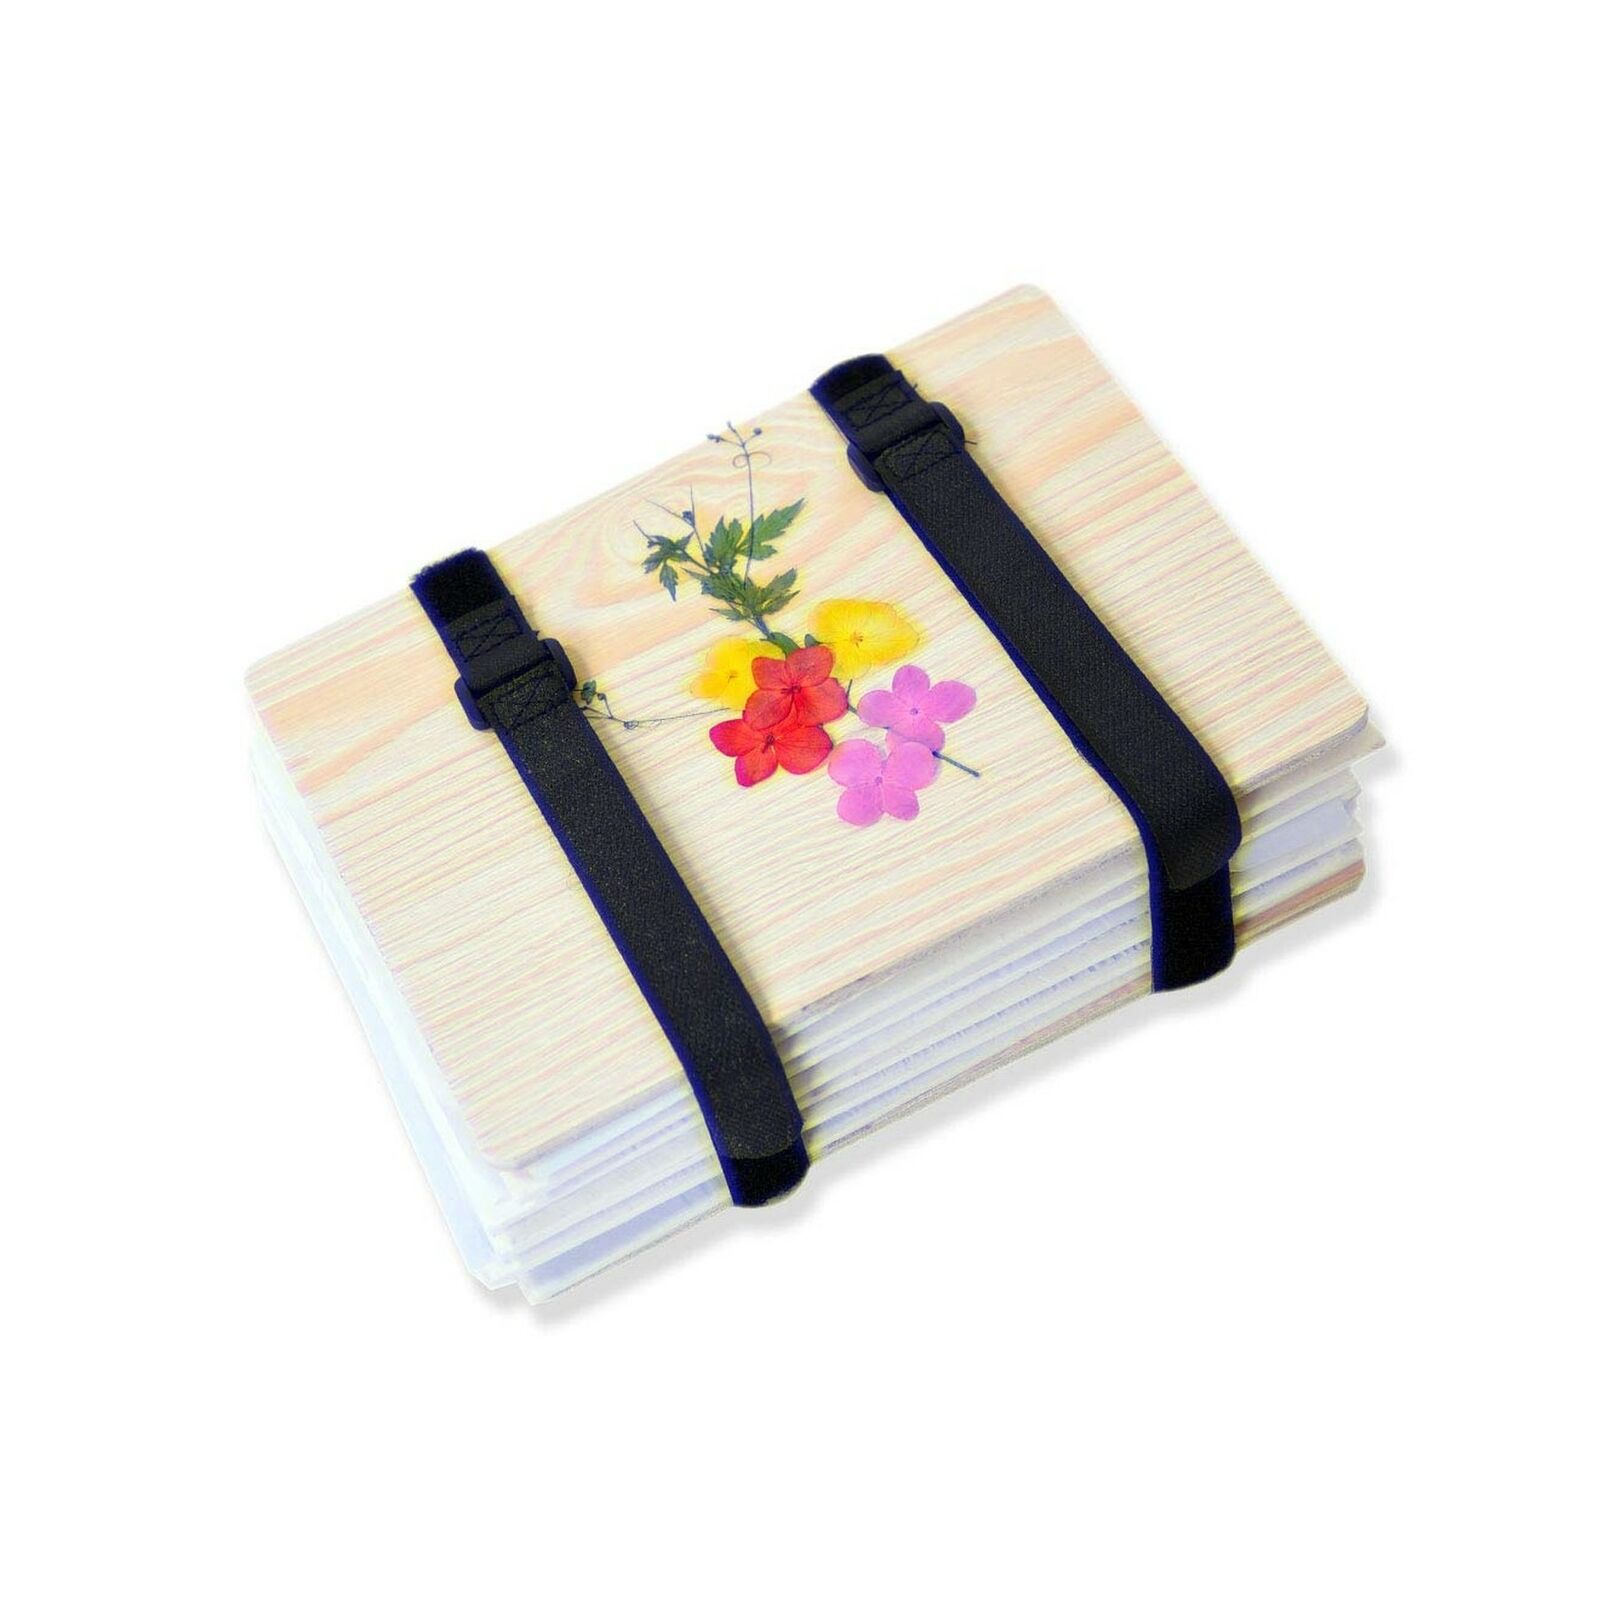 A&i Wooden Flower Press Kit For Kids, Plant Specimen Pressing Set For Beginne...